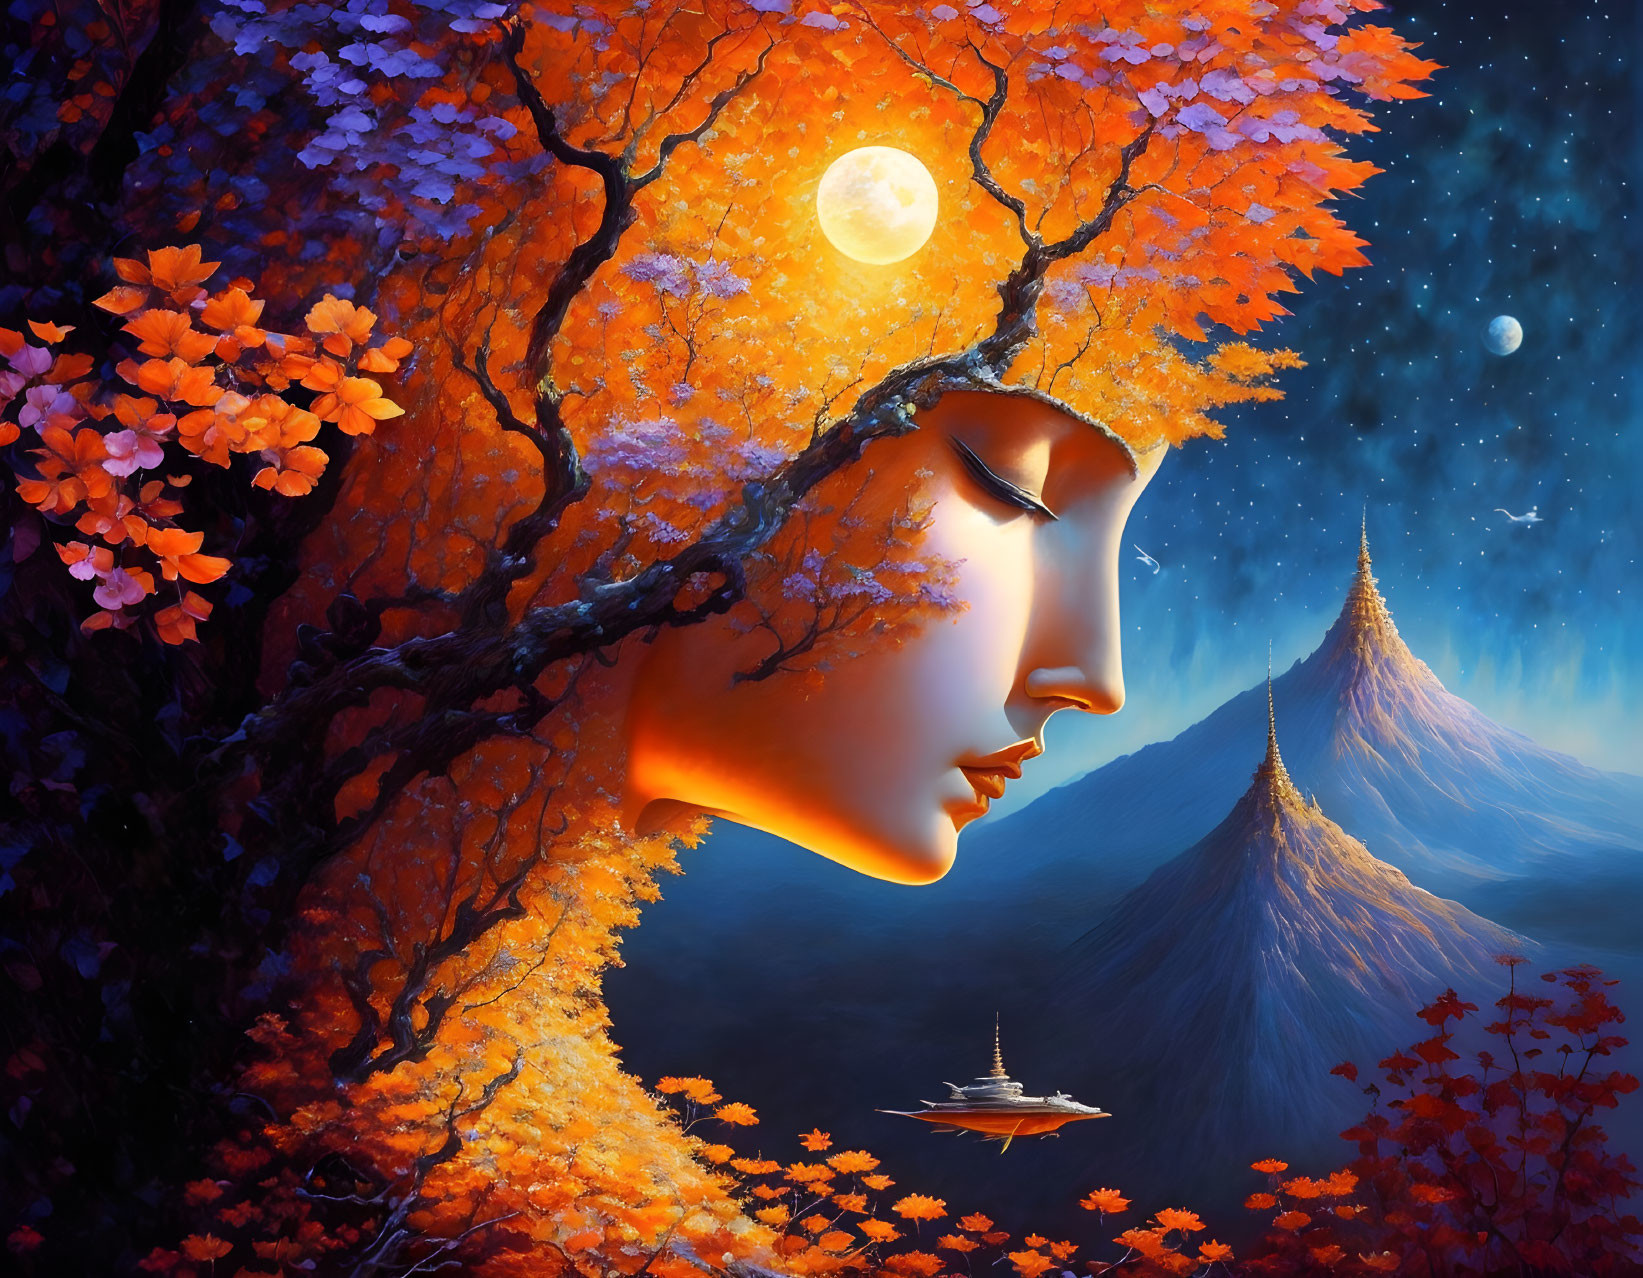 Surreal artwork: Woman's profile merges with autumn tree, moon, planet, mountain, spaceship